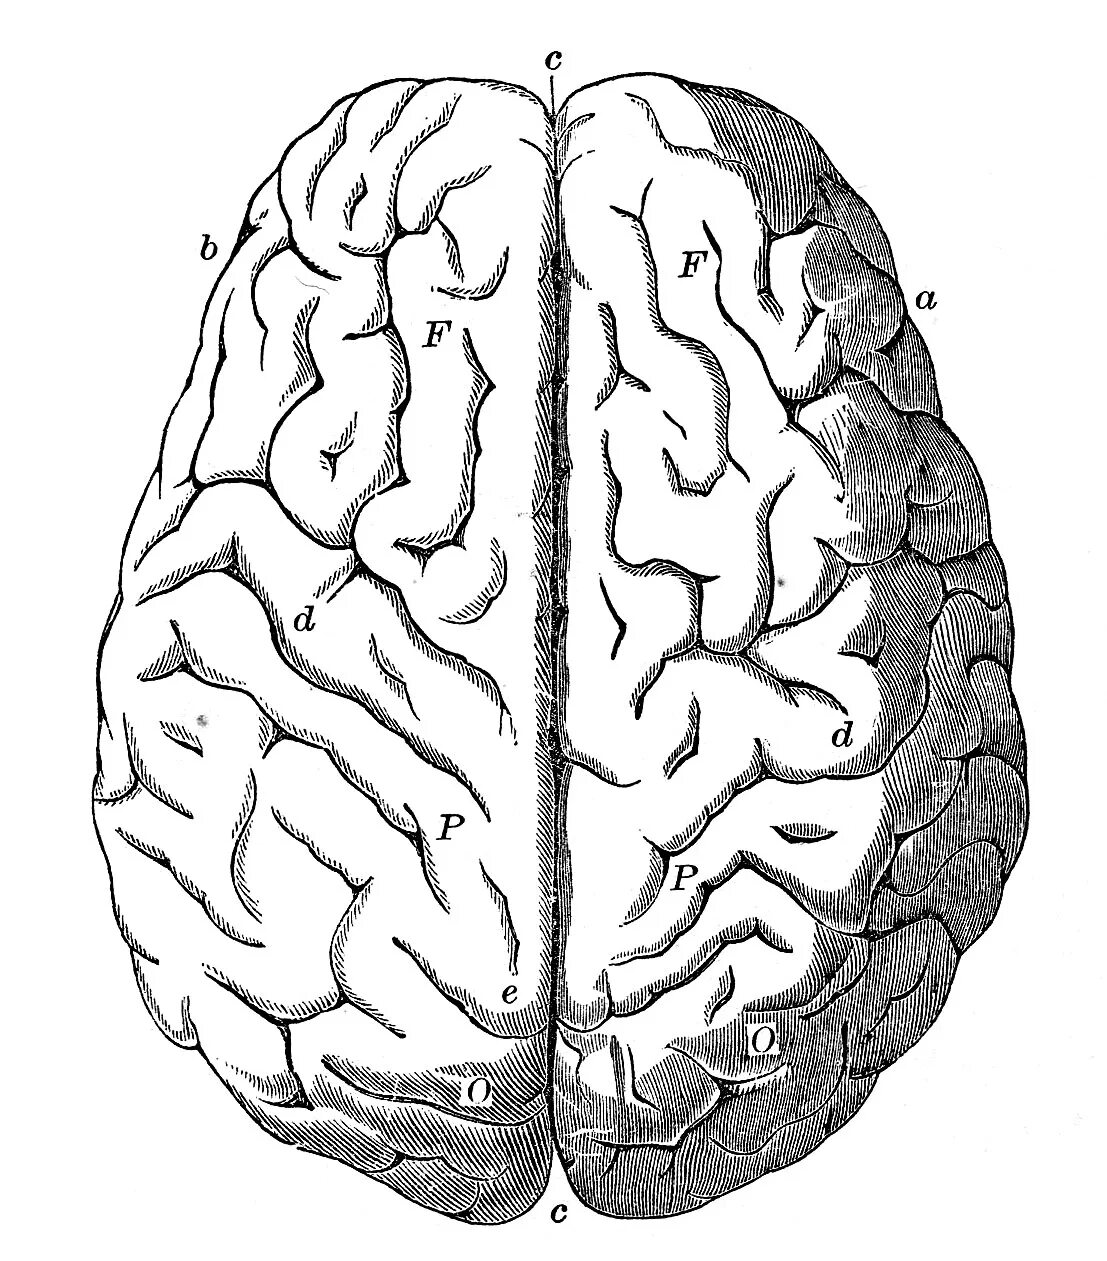 Мозг вид сверху. Человеческий мозг вид сверху. Симметричный мозг. Полушария мозга вид сверху.